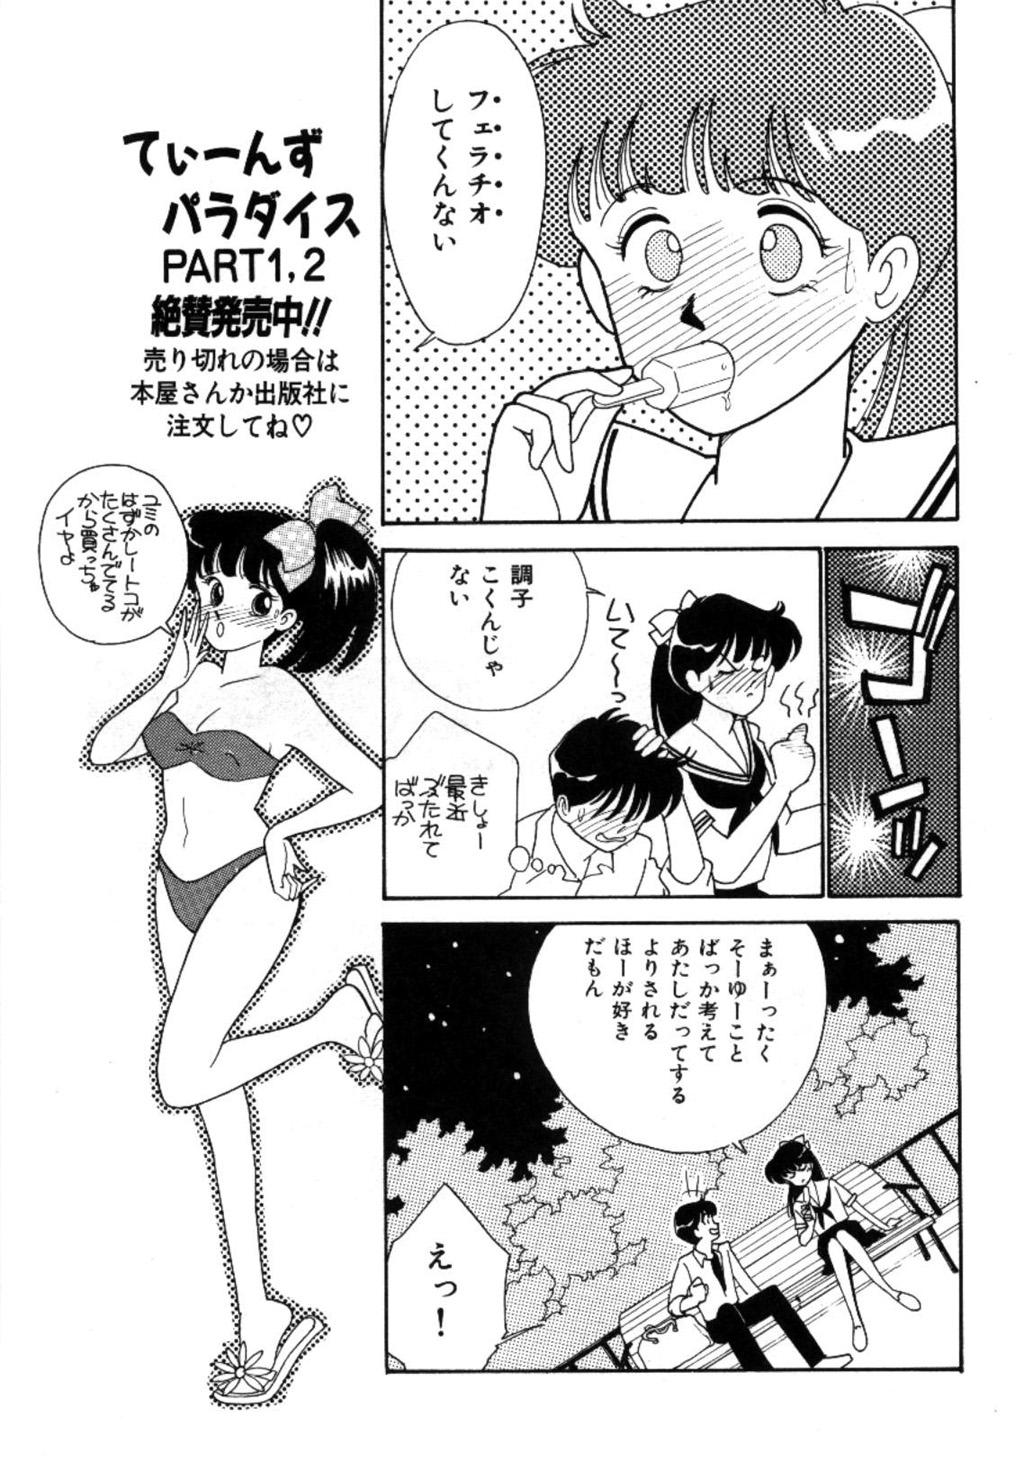 Aitsu to Scandal - Teens Paradise Part 3 15